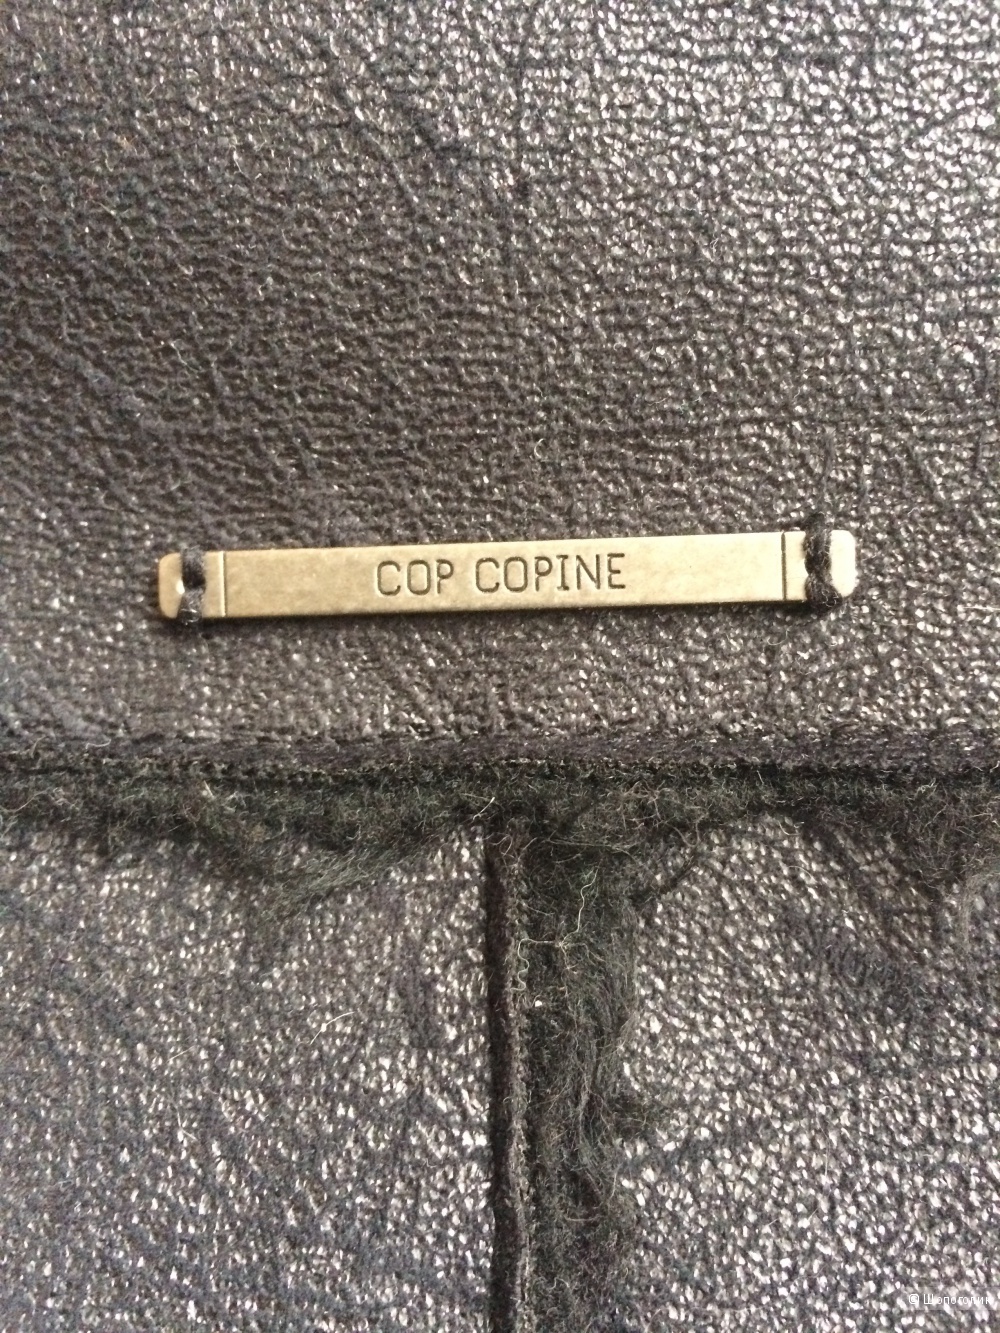 Дубленка COP COPINE, размер 44-46. Франция.